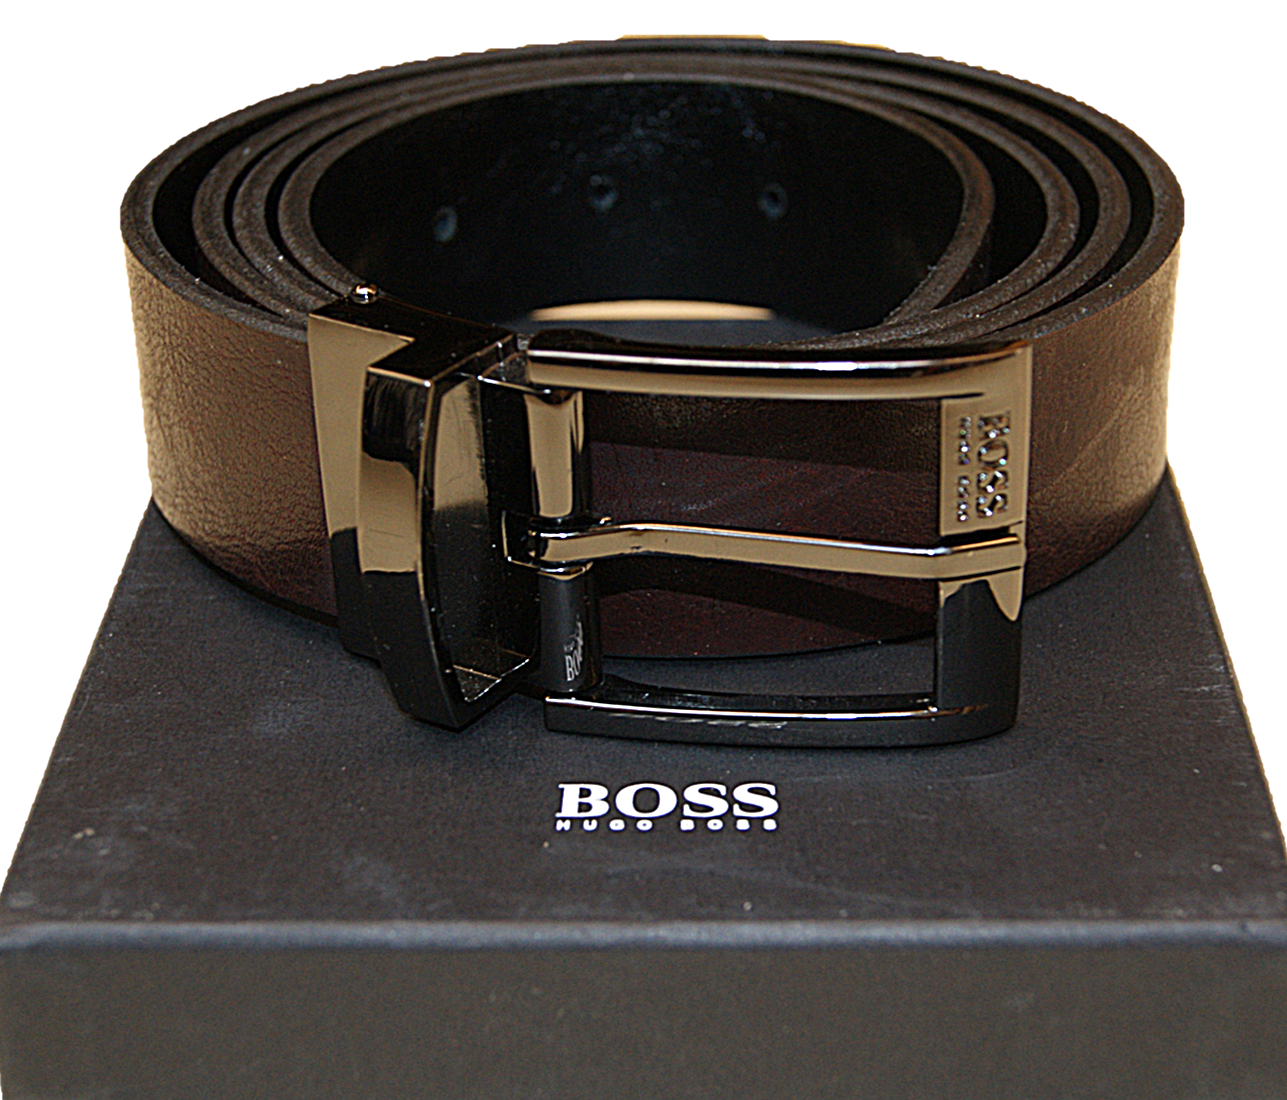 Hugo Boss Gürtel zum OMBIO selberkürzen Farbe schwarz 001-50228928-002